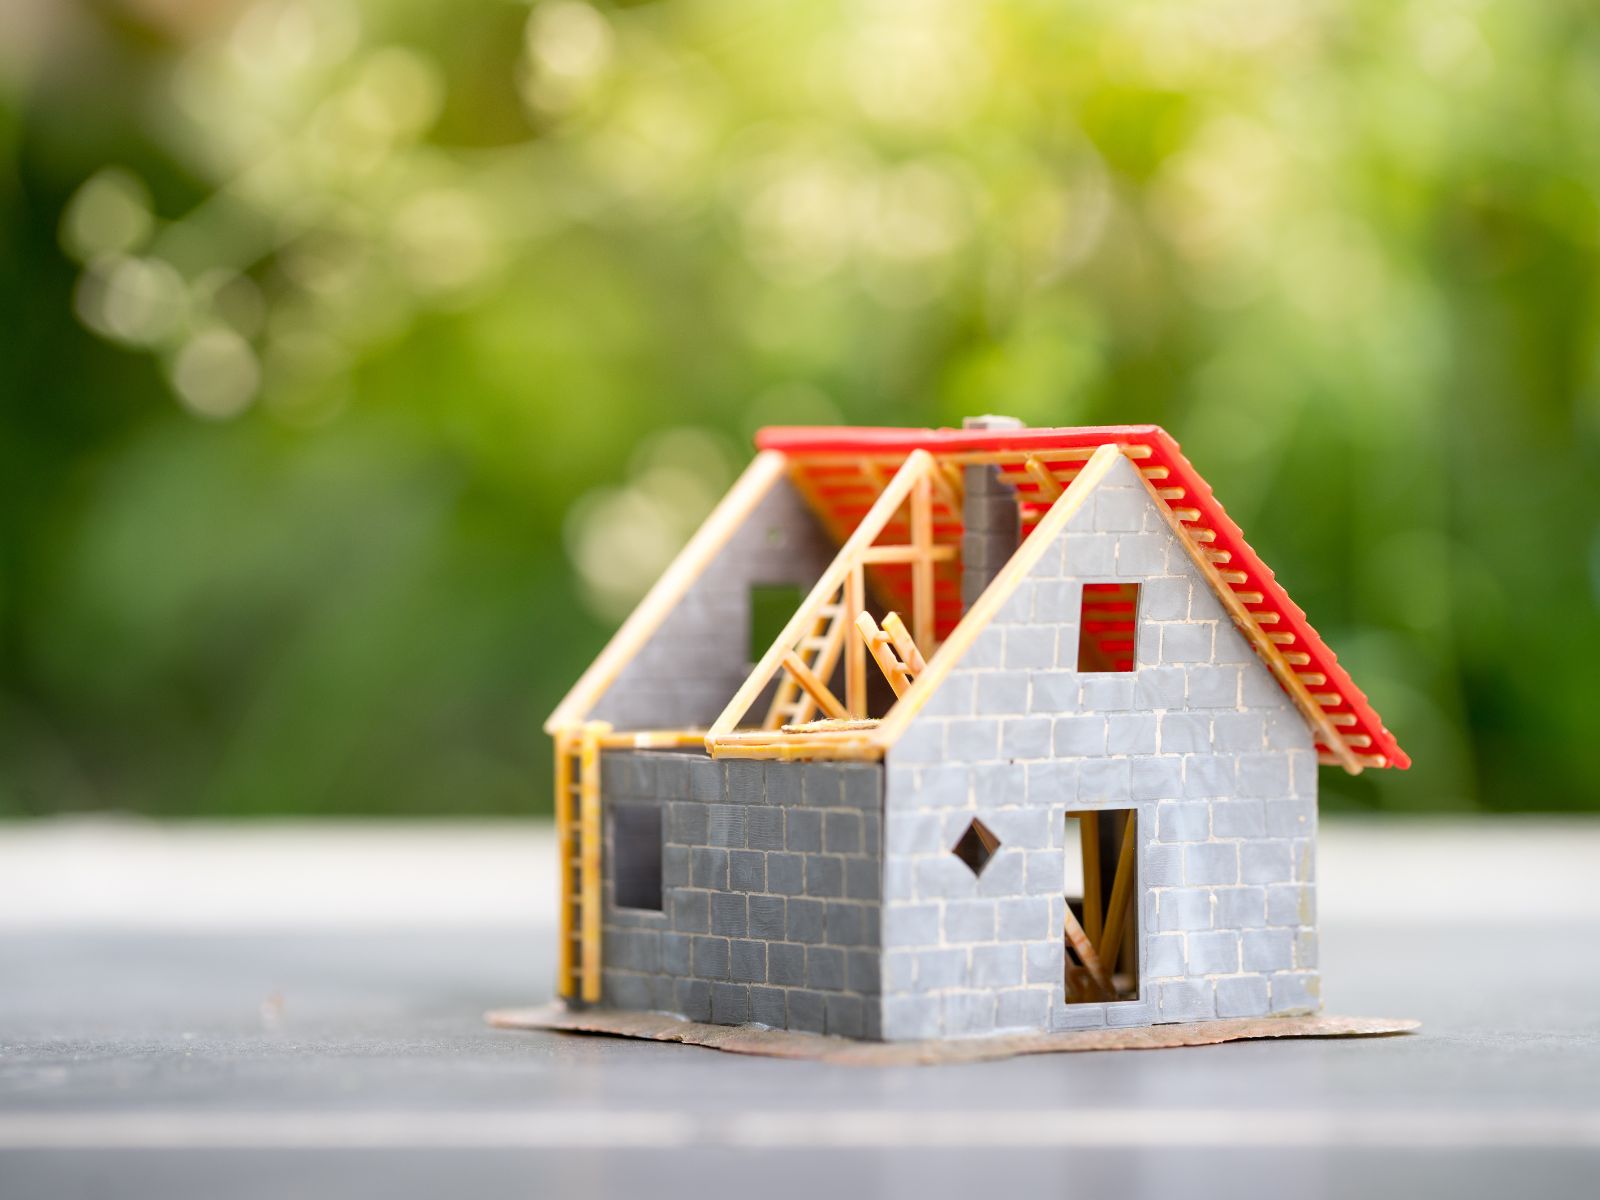 Johnson Bill to Regulate Home Improvement Contractors Advances